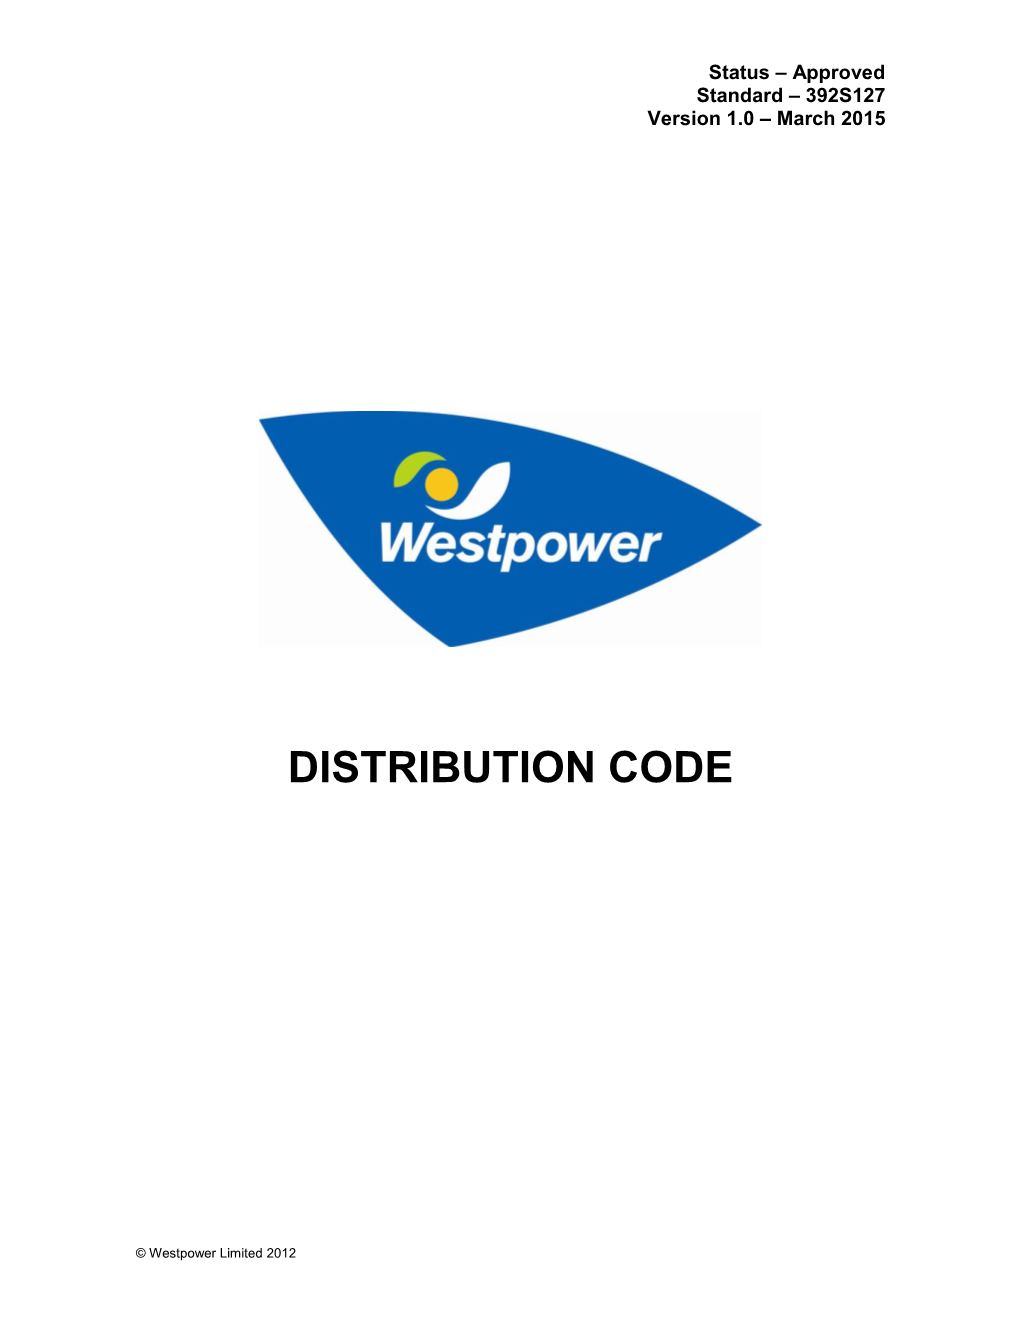 Distribution Code